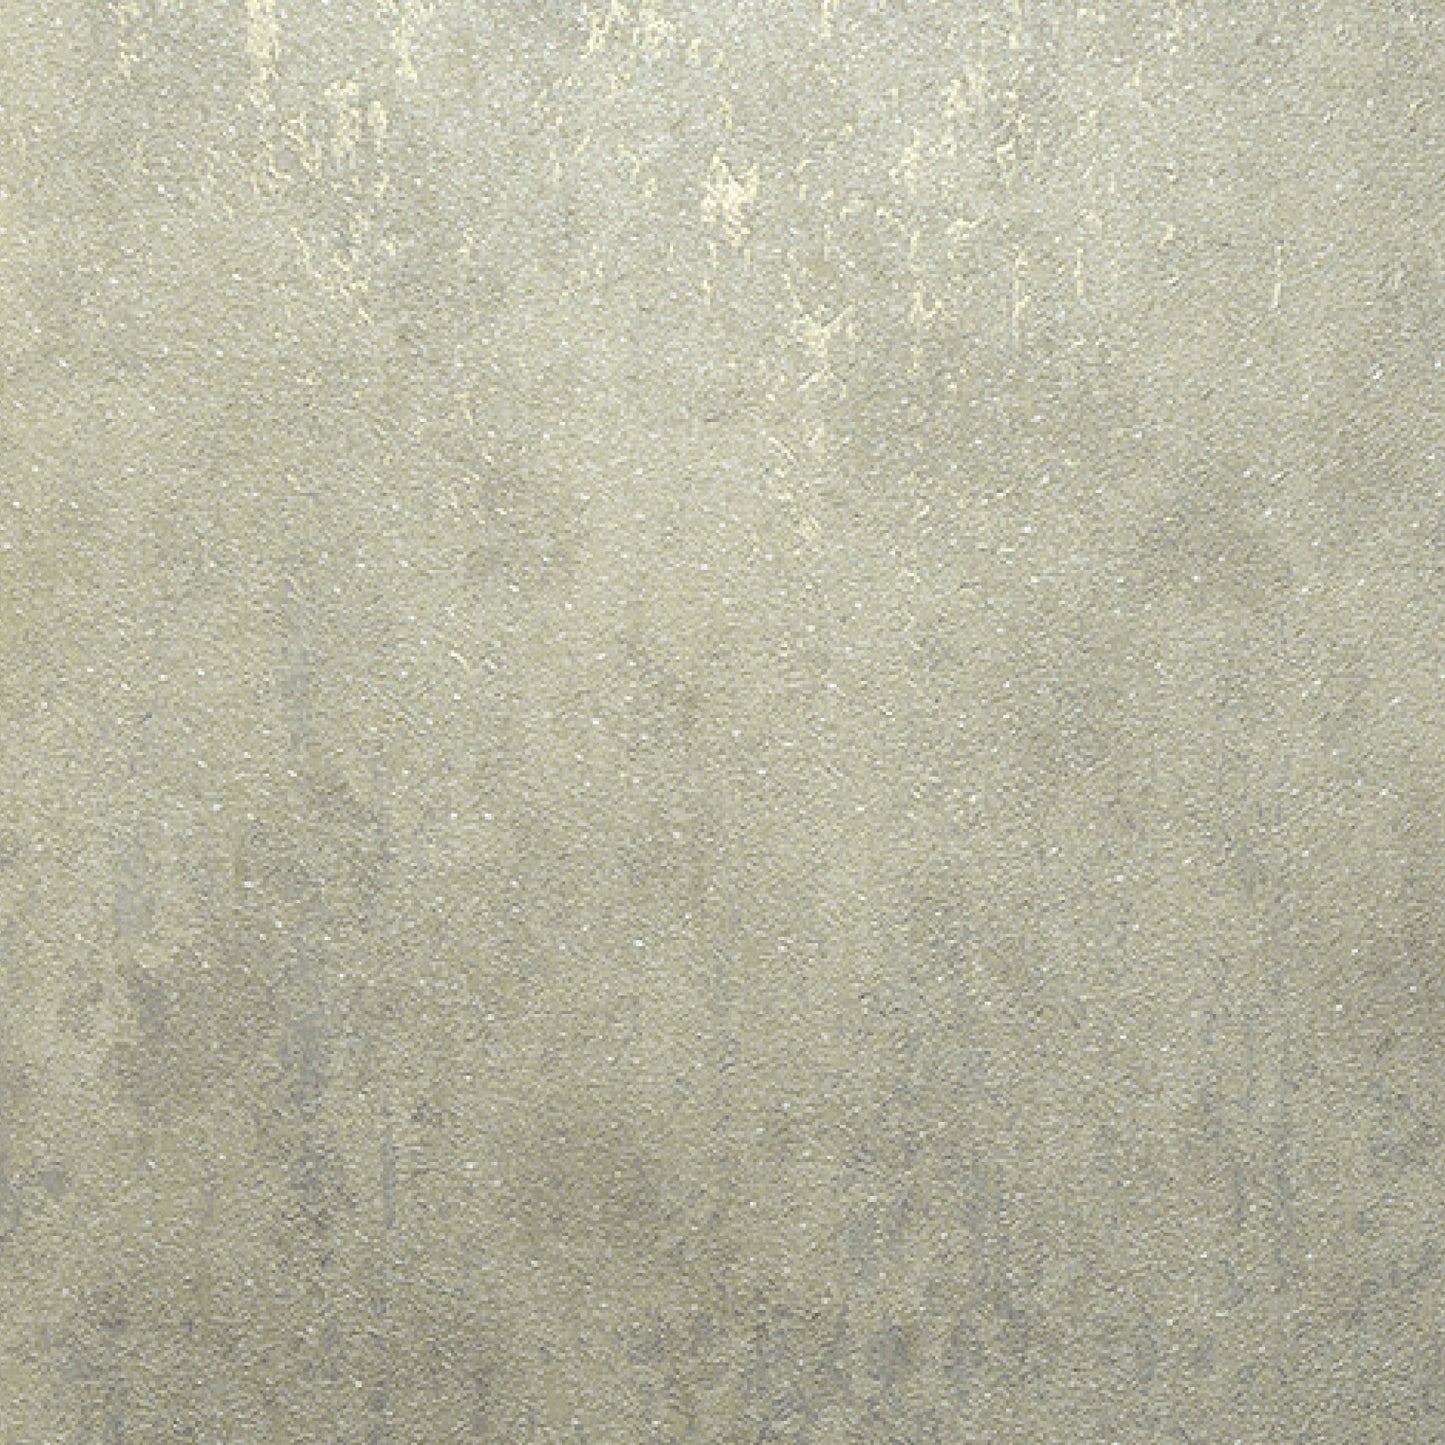 Minty Fresh Granular Texture Wallpaper